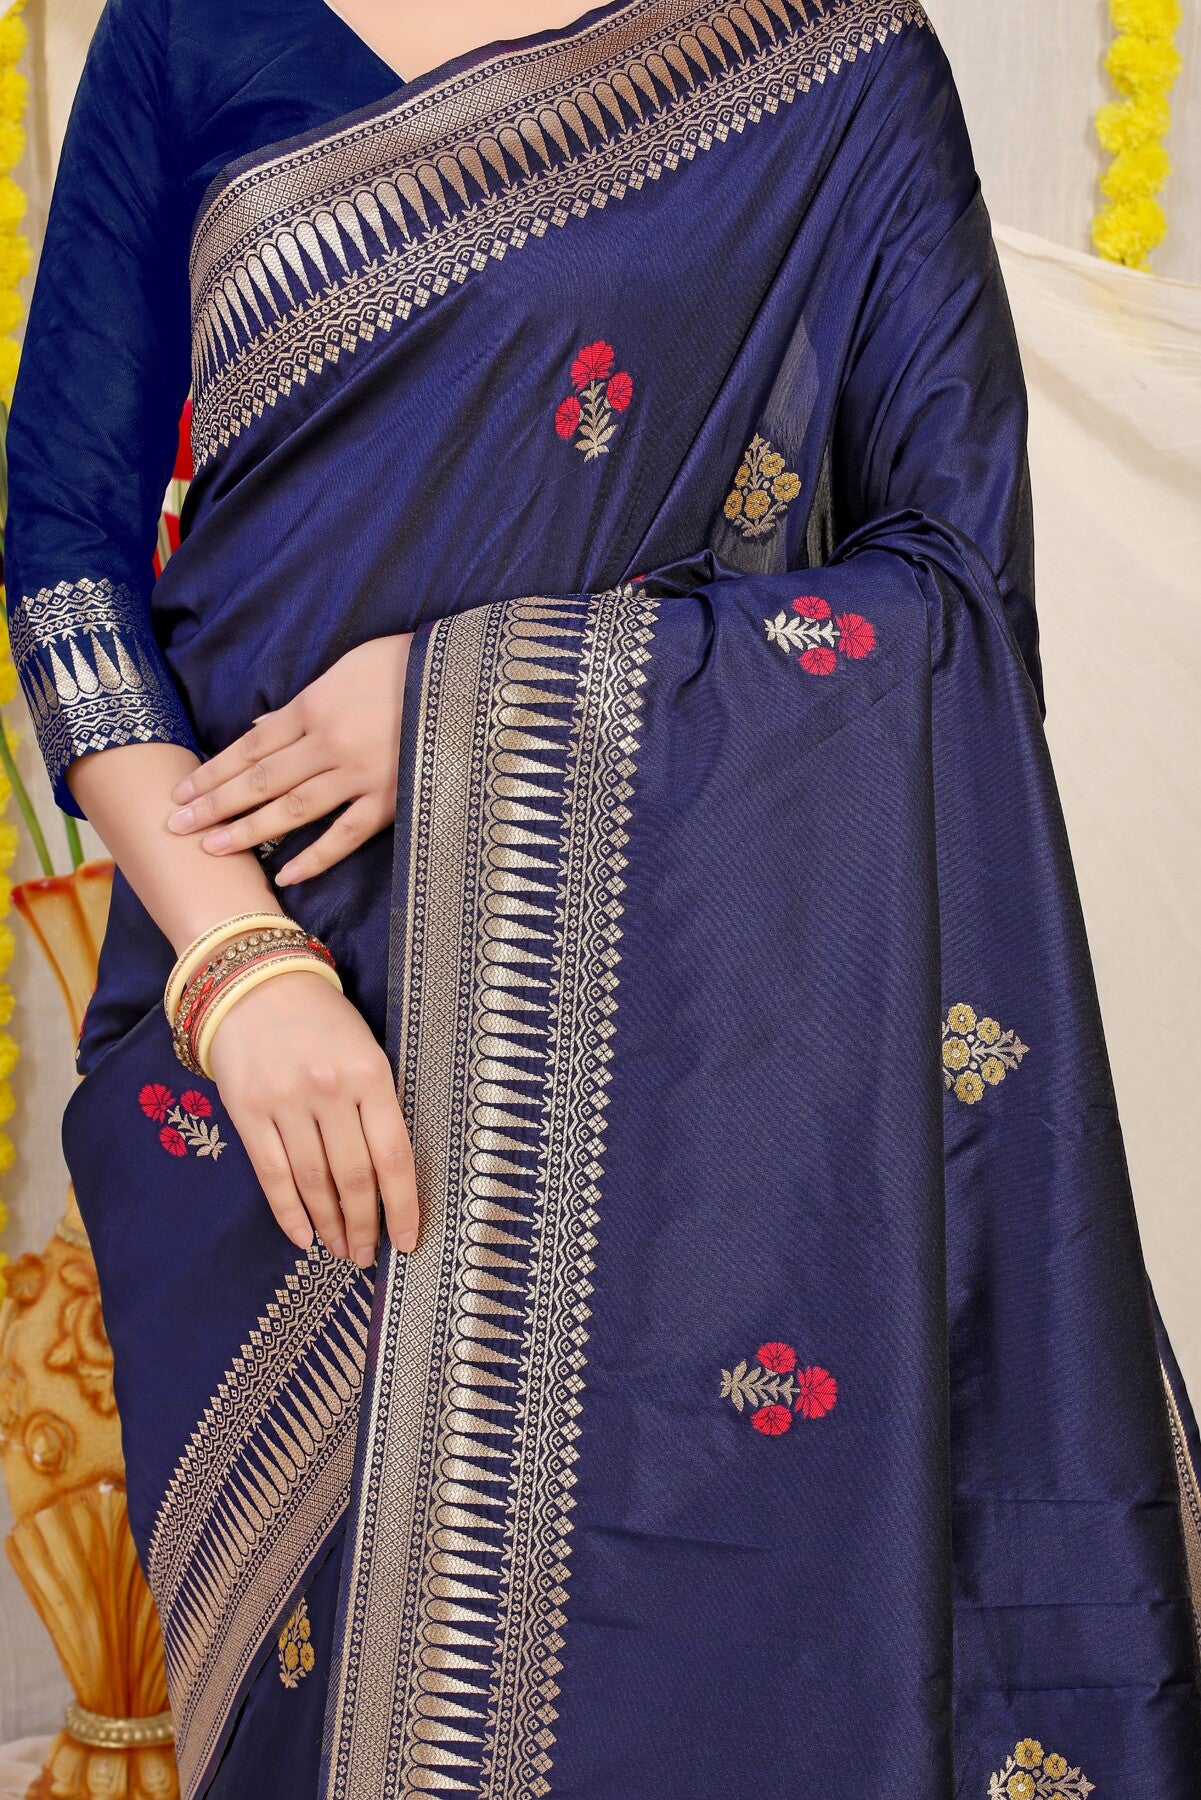 Stylish Navy Blue Banarasi Silk Saree With Magnetic Blouse Piece